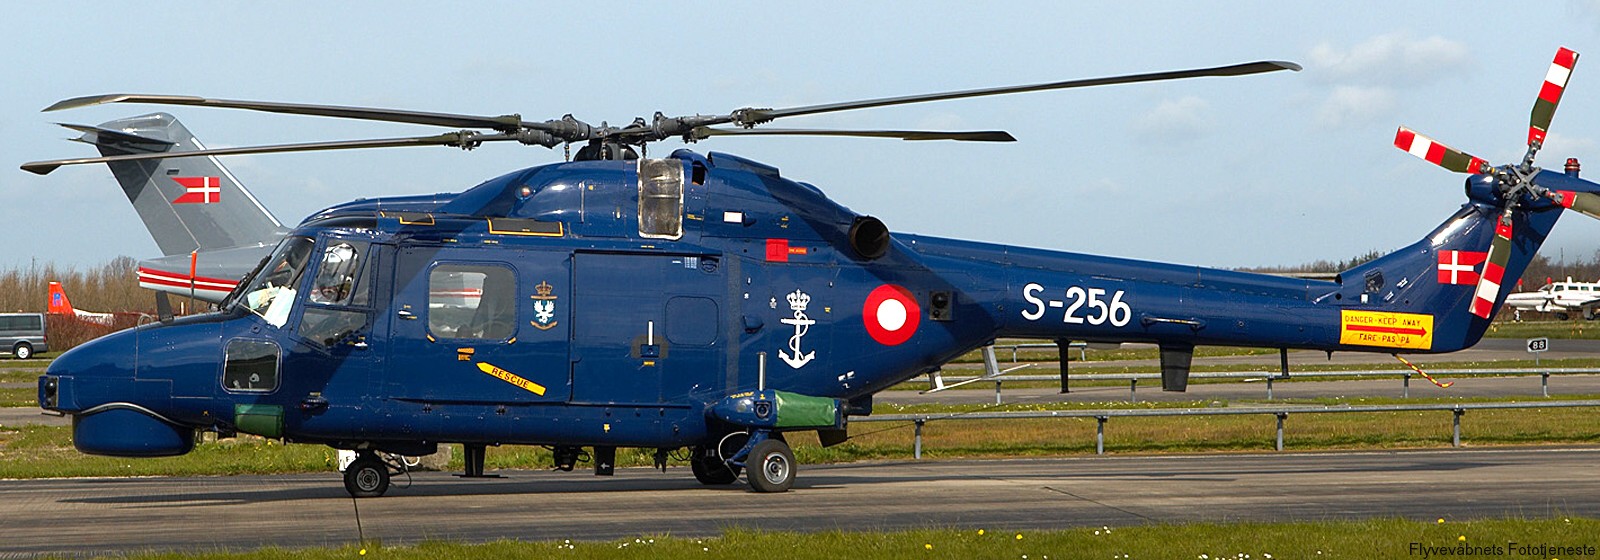 lynx mk.80 mk.90b helicopter westland royal danish navy air force kongelige danske marine flyvevabnet s-256 05